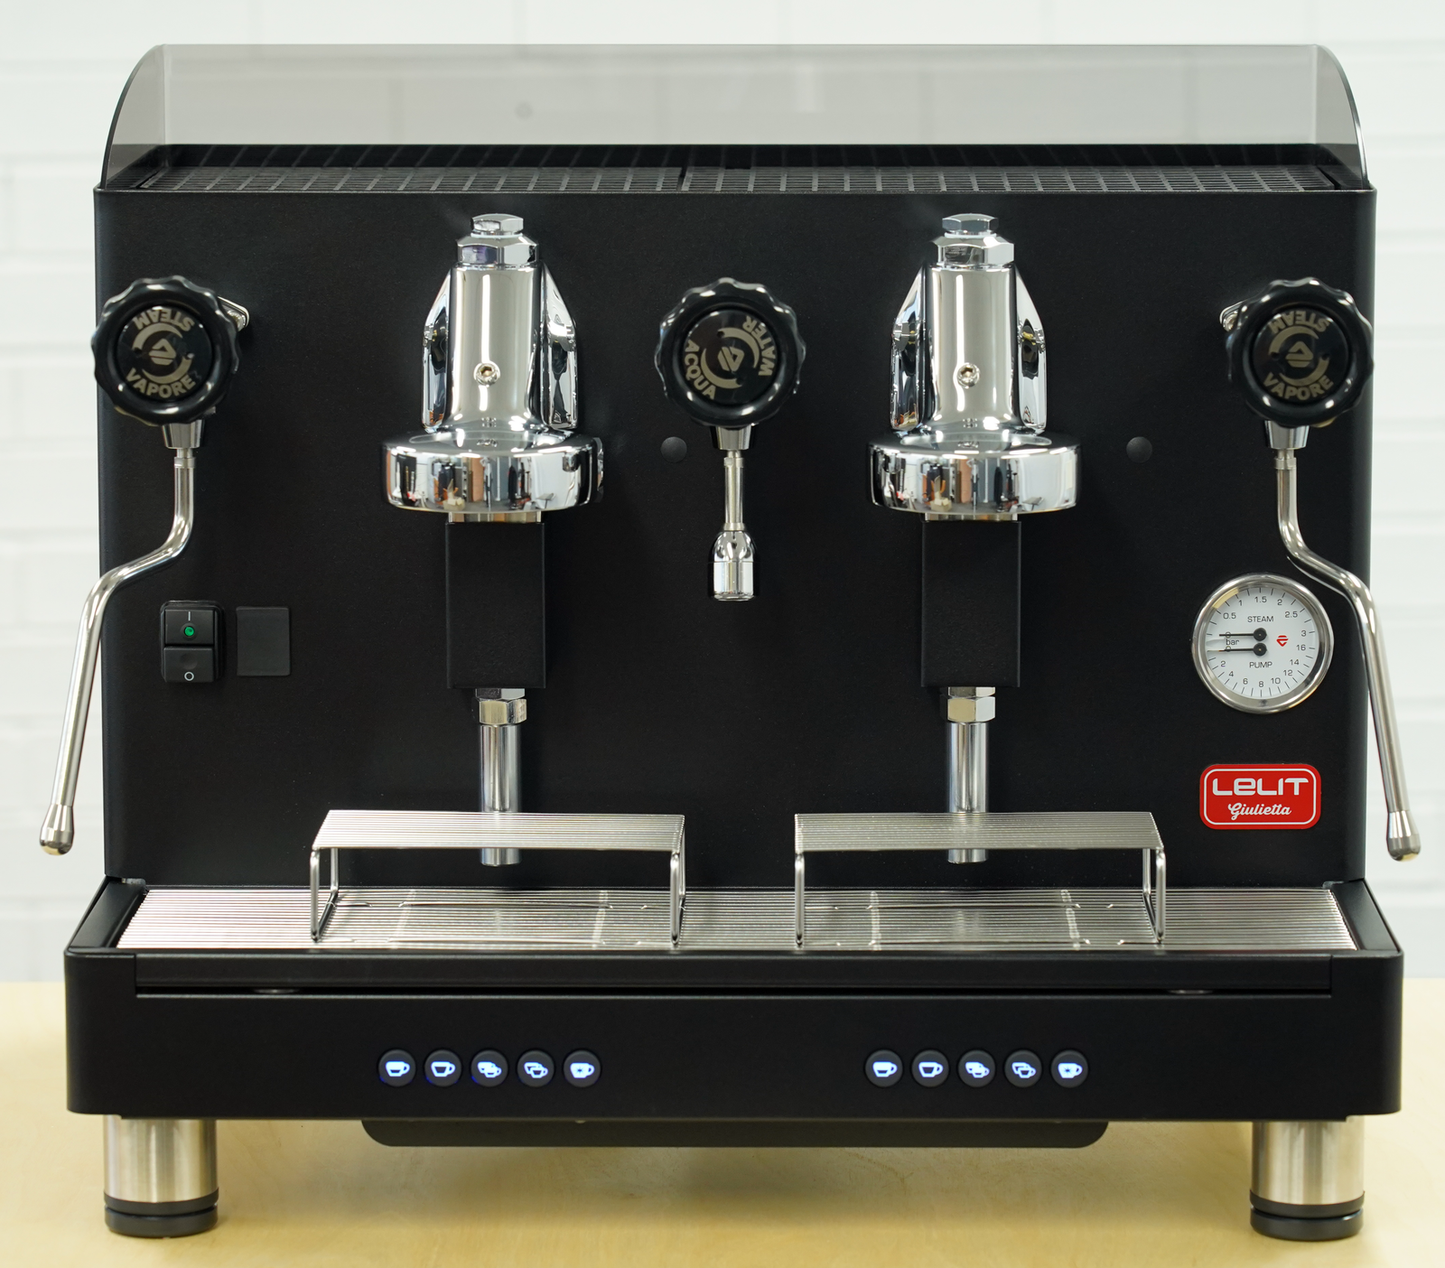 Lelit Giulietta X 2grp Commercial coffee machine